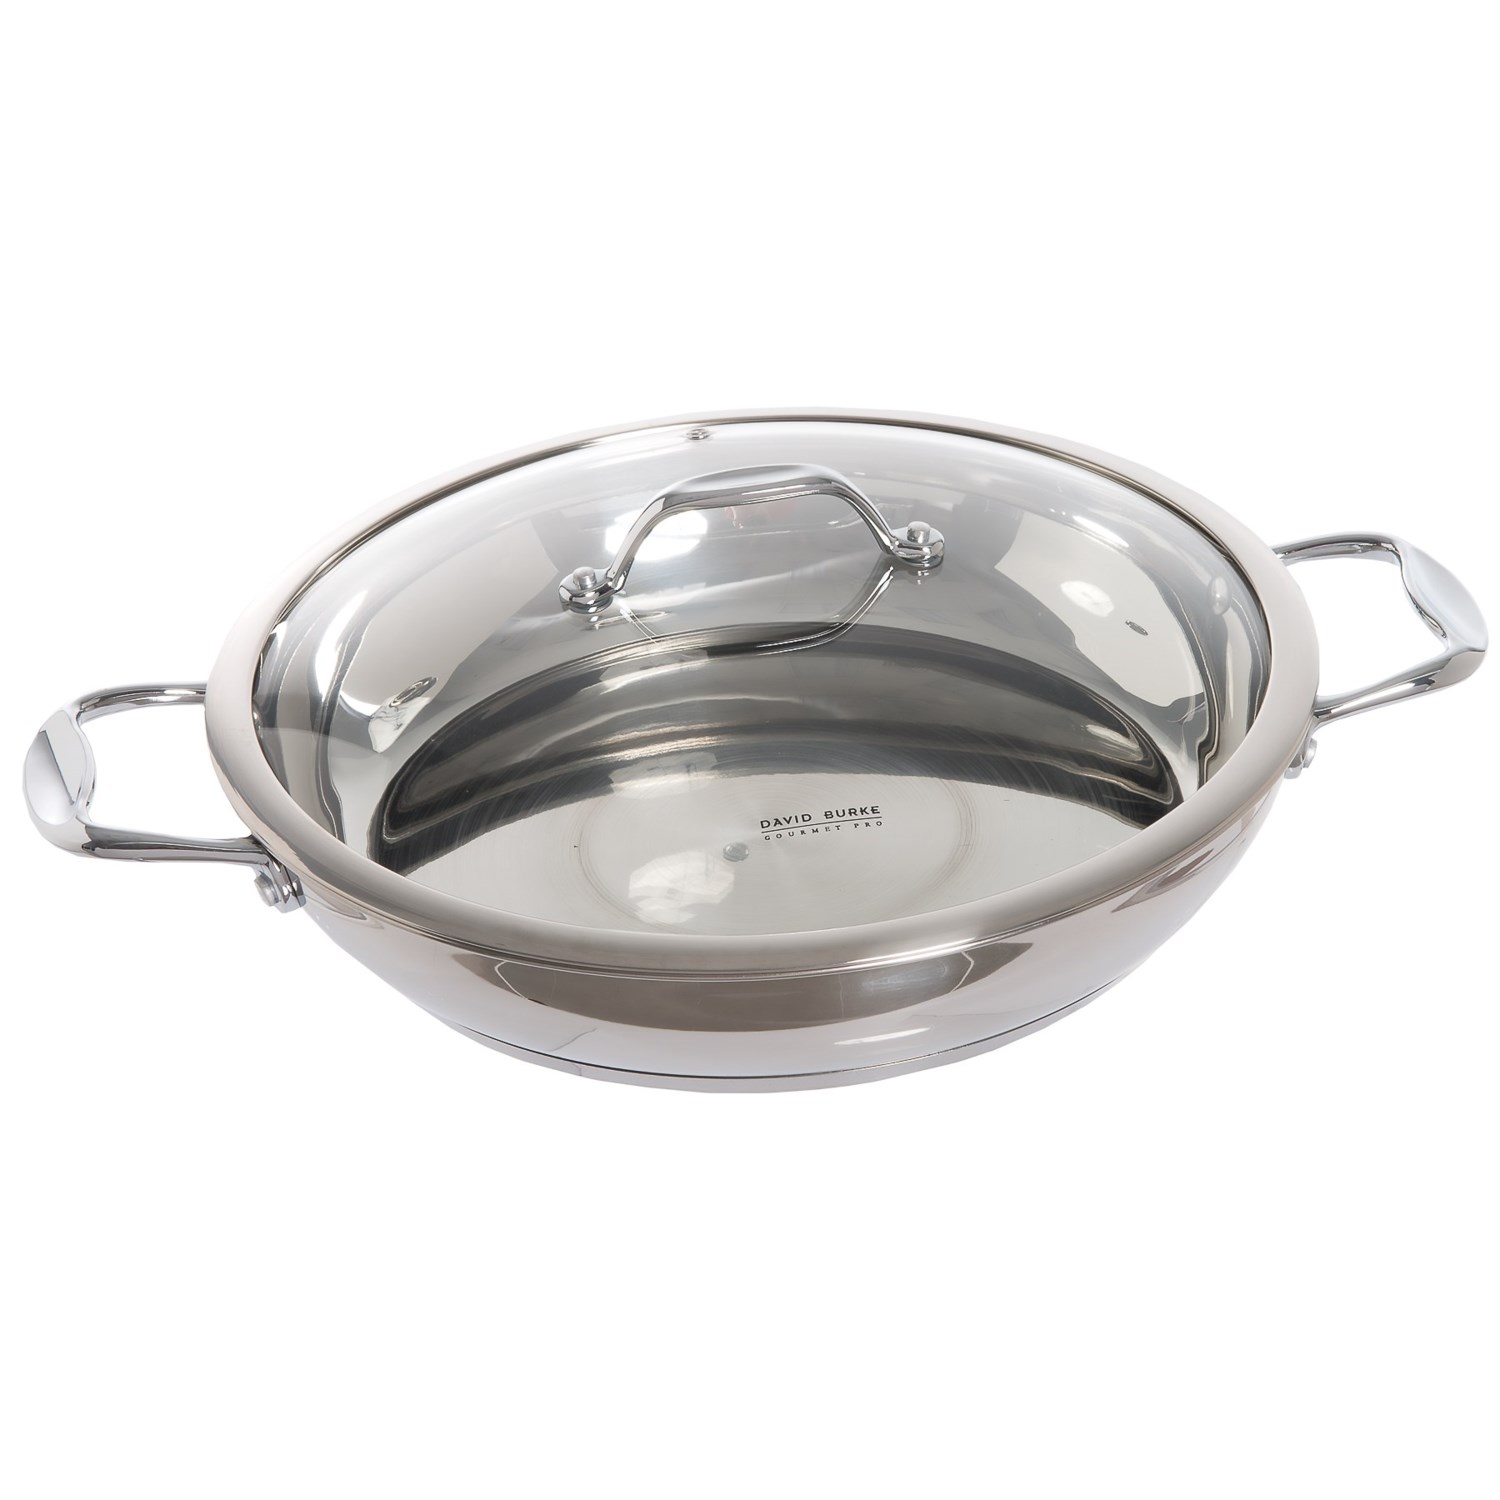 David Burke Gourmet Pro Splendor Everyday Pan with Lid - 12.5” - Save 42% David Burke Stainless Steel Cookware